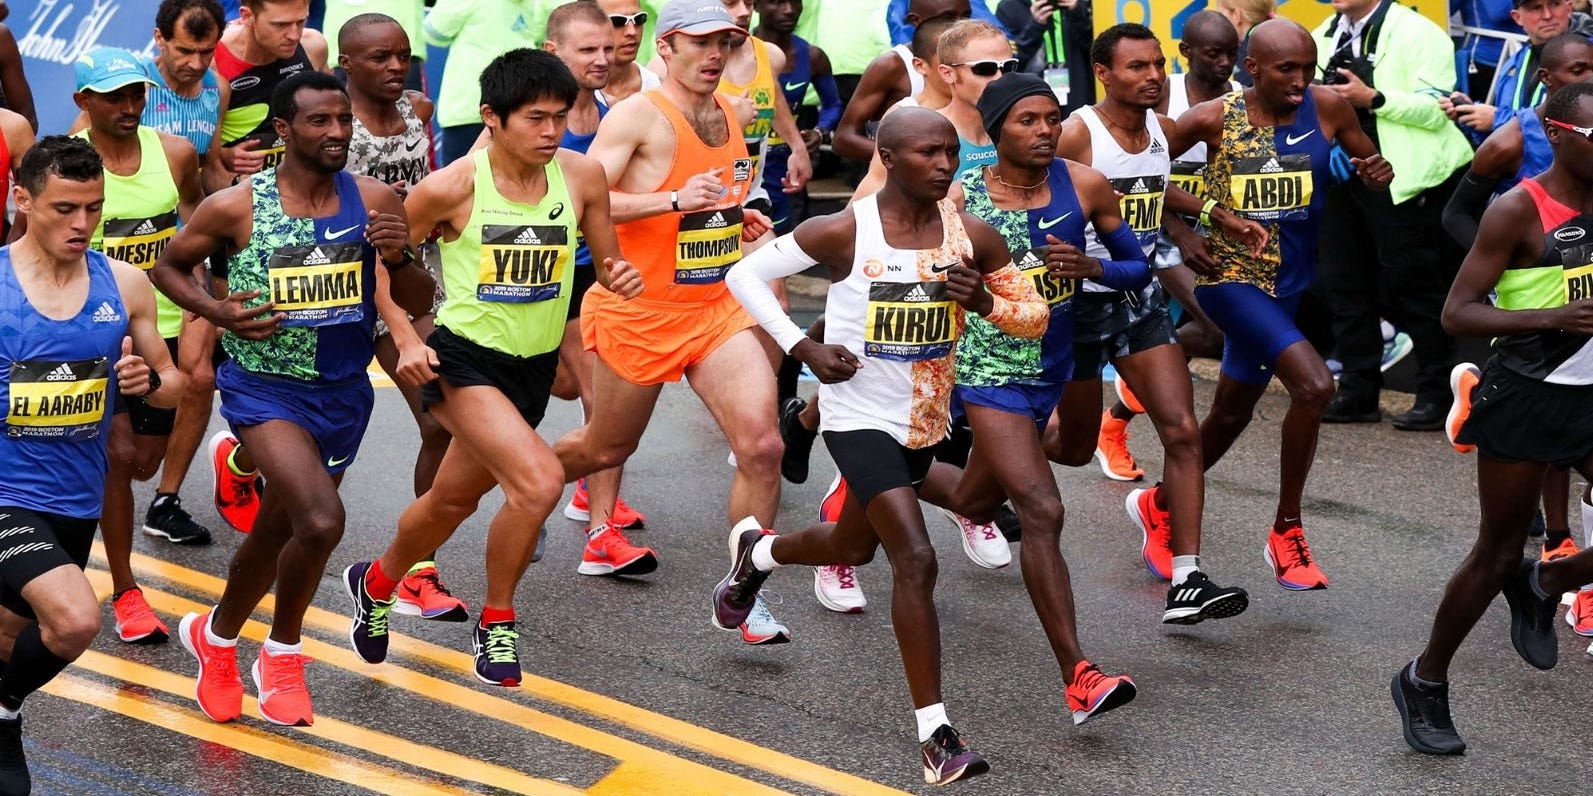 suficiente Fobia medio Boston Marathon shoes: Adidas, Nike, Asics, Skechers and more